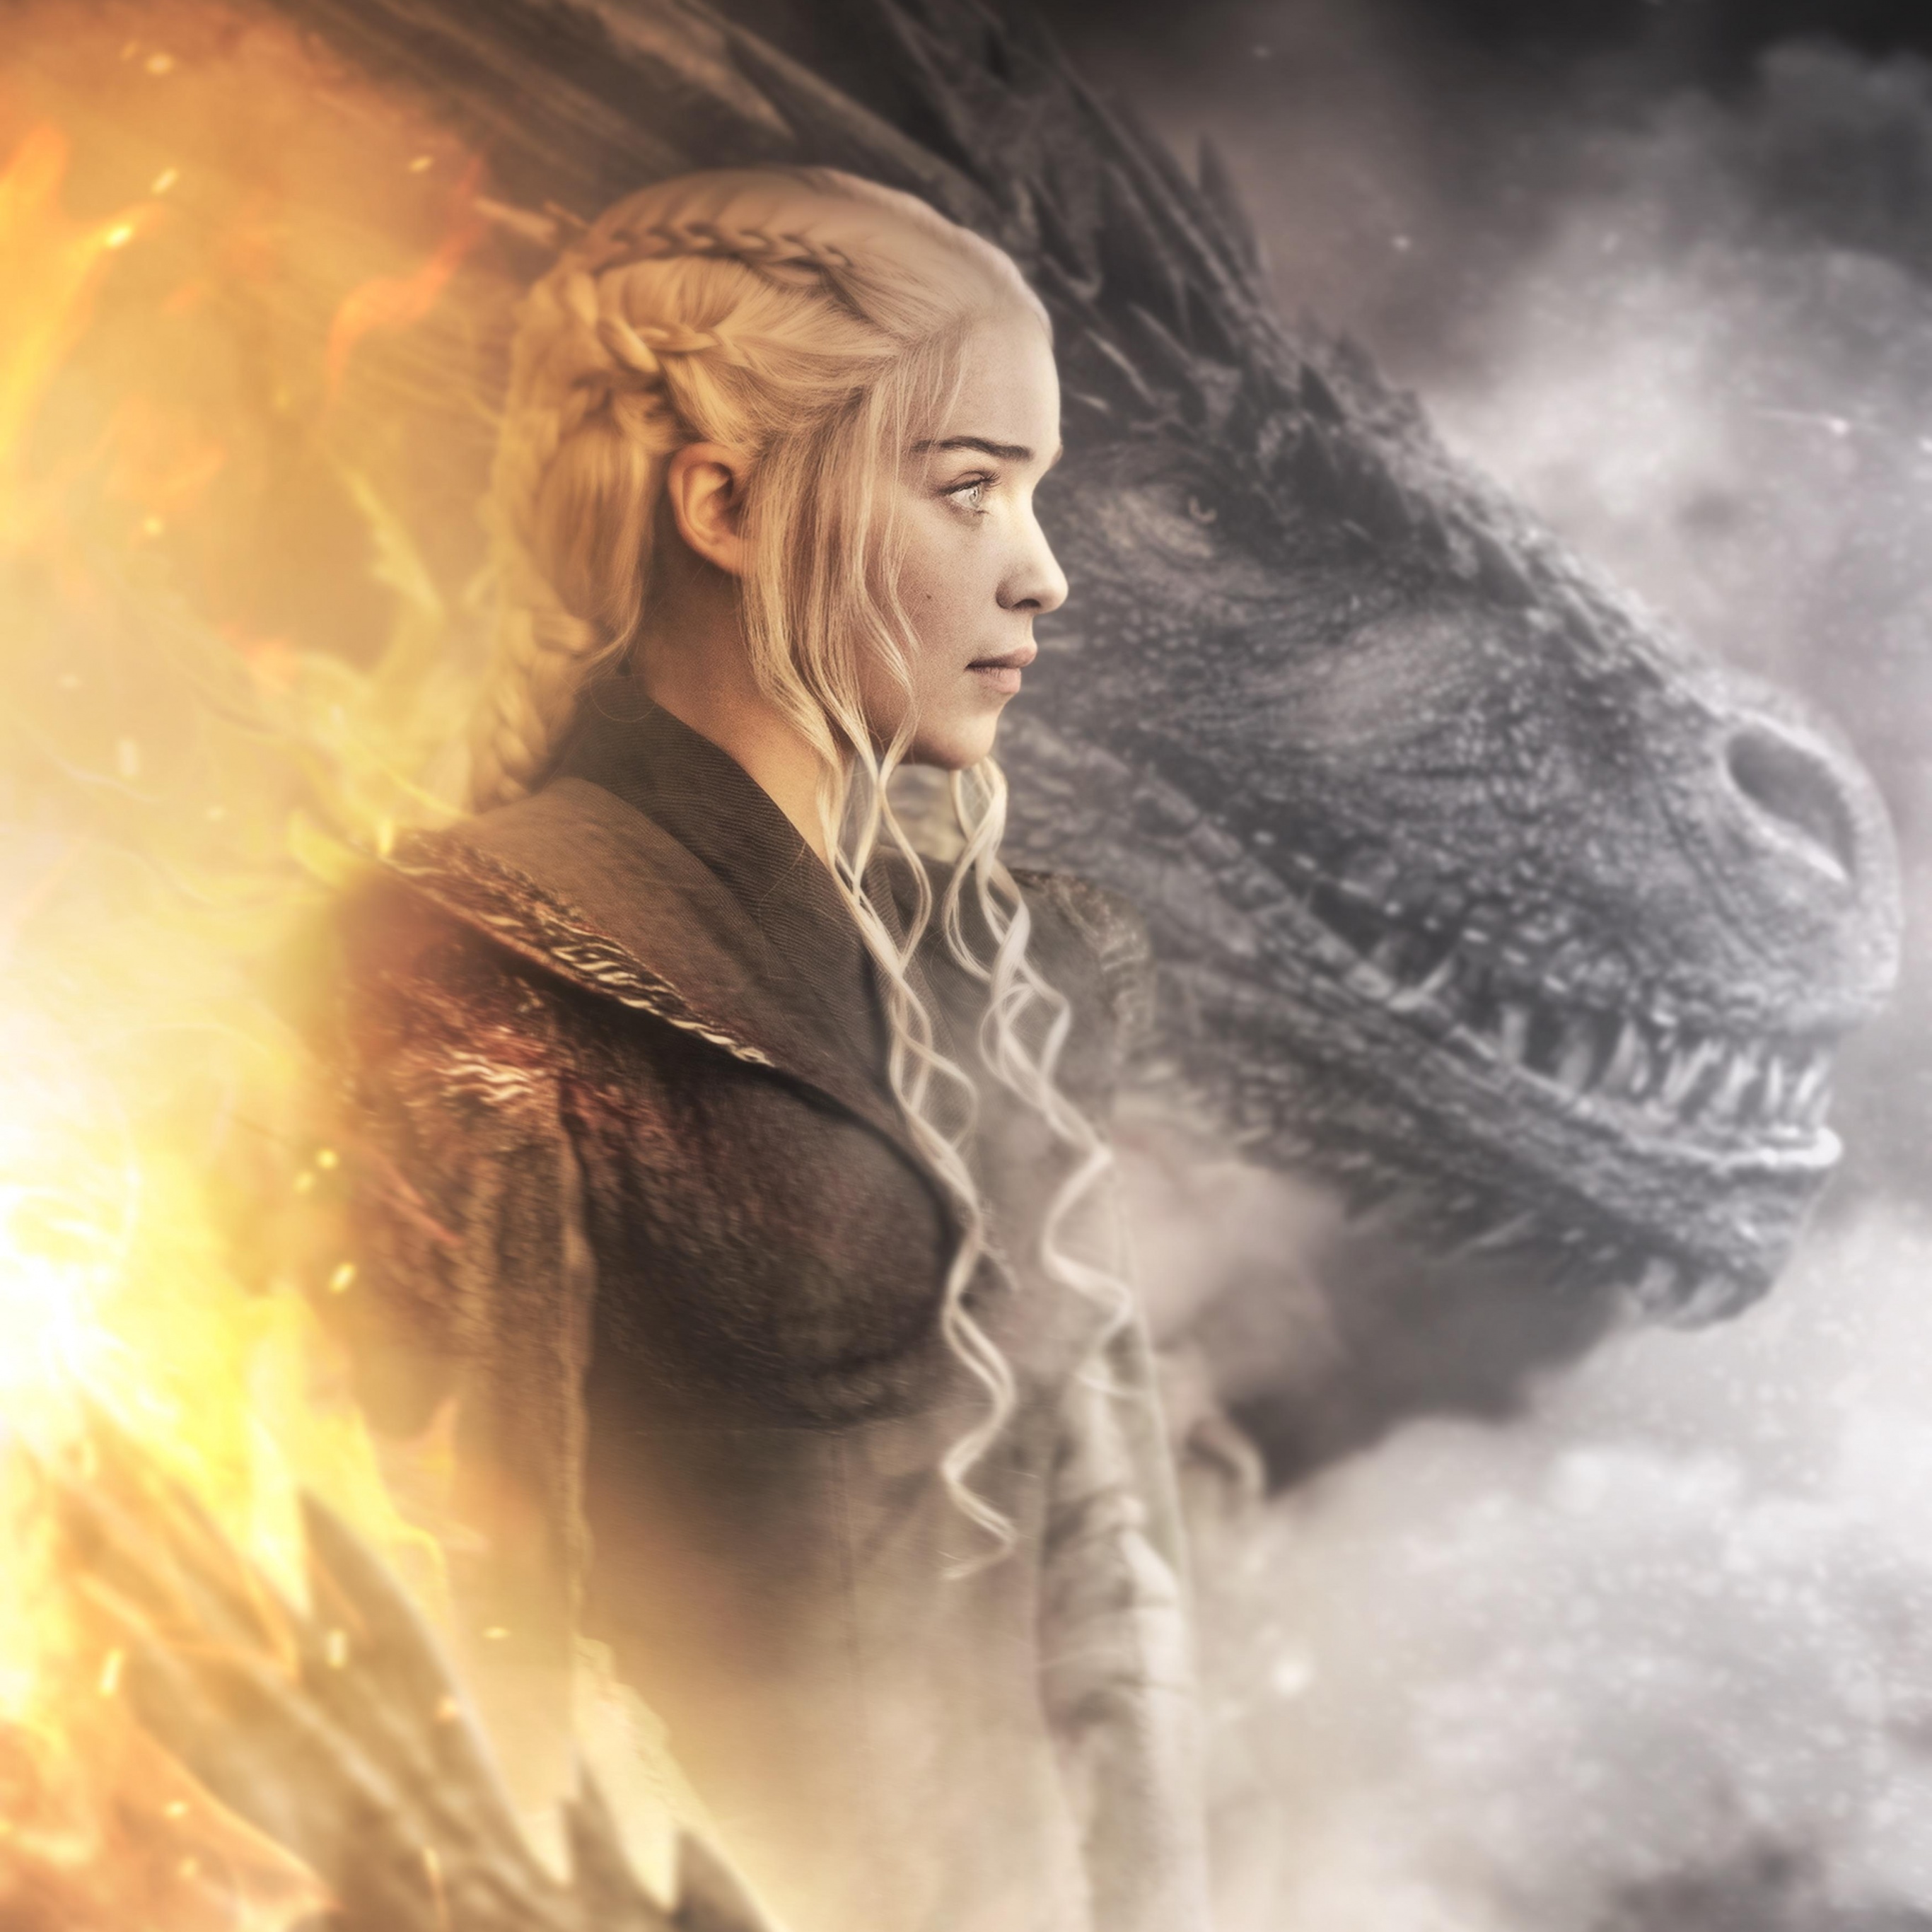 Wallpaper ID 368625  TV Show Game Of Thrones Phone Wallpaper Daenerys  Targaryen Emilia Clarke 1080x2280 free download